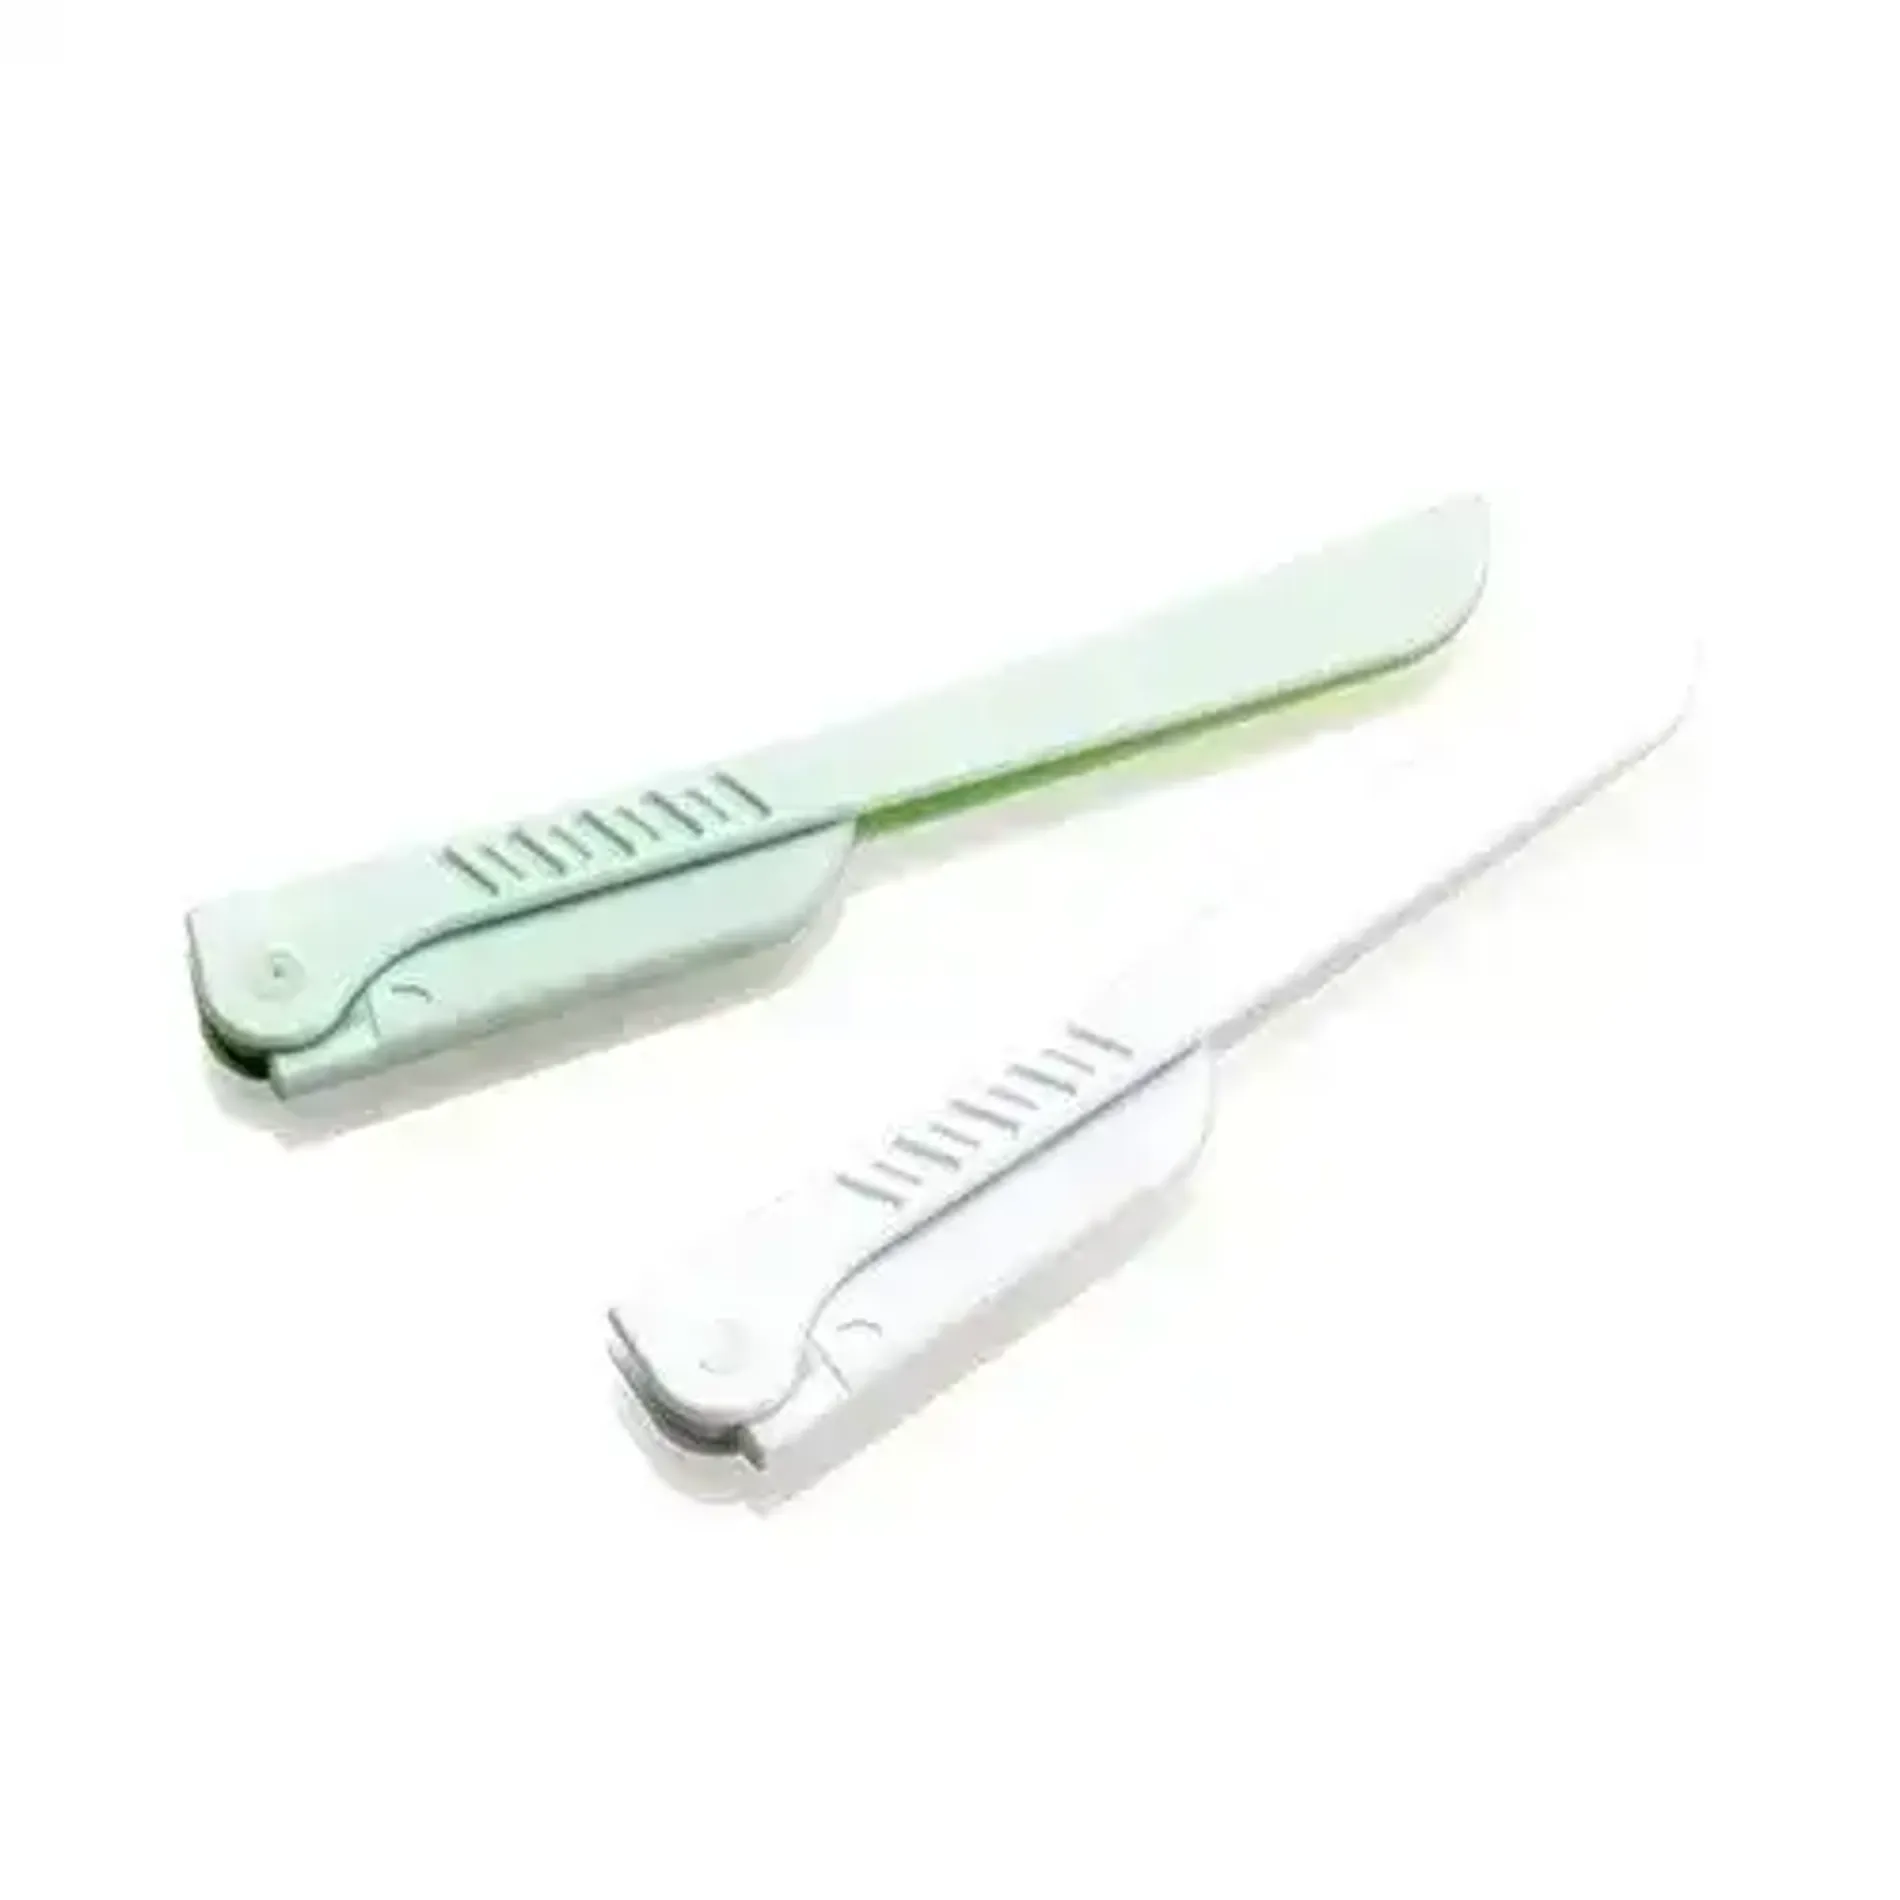 dao-tia-chan-may-daily-beauty-tools-folding-eyebrow-trimmer-2pcs-2